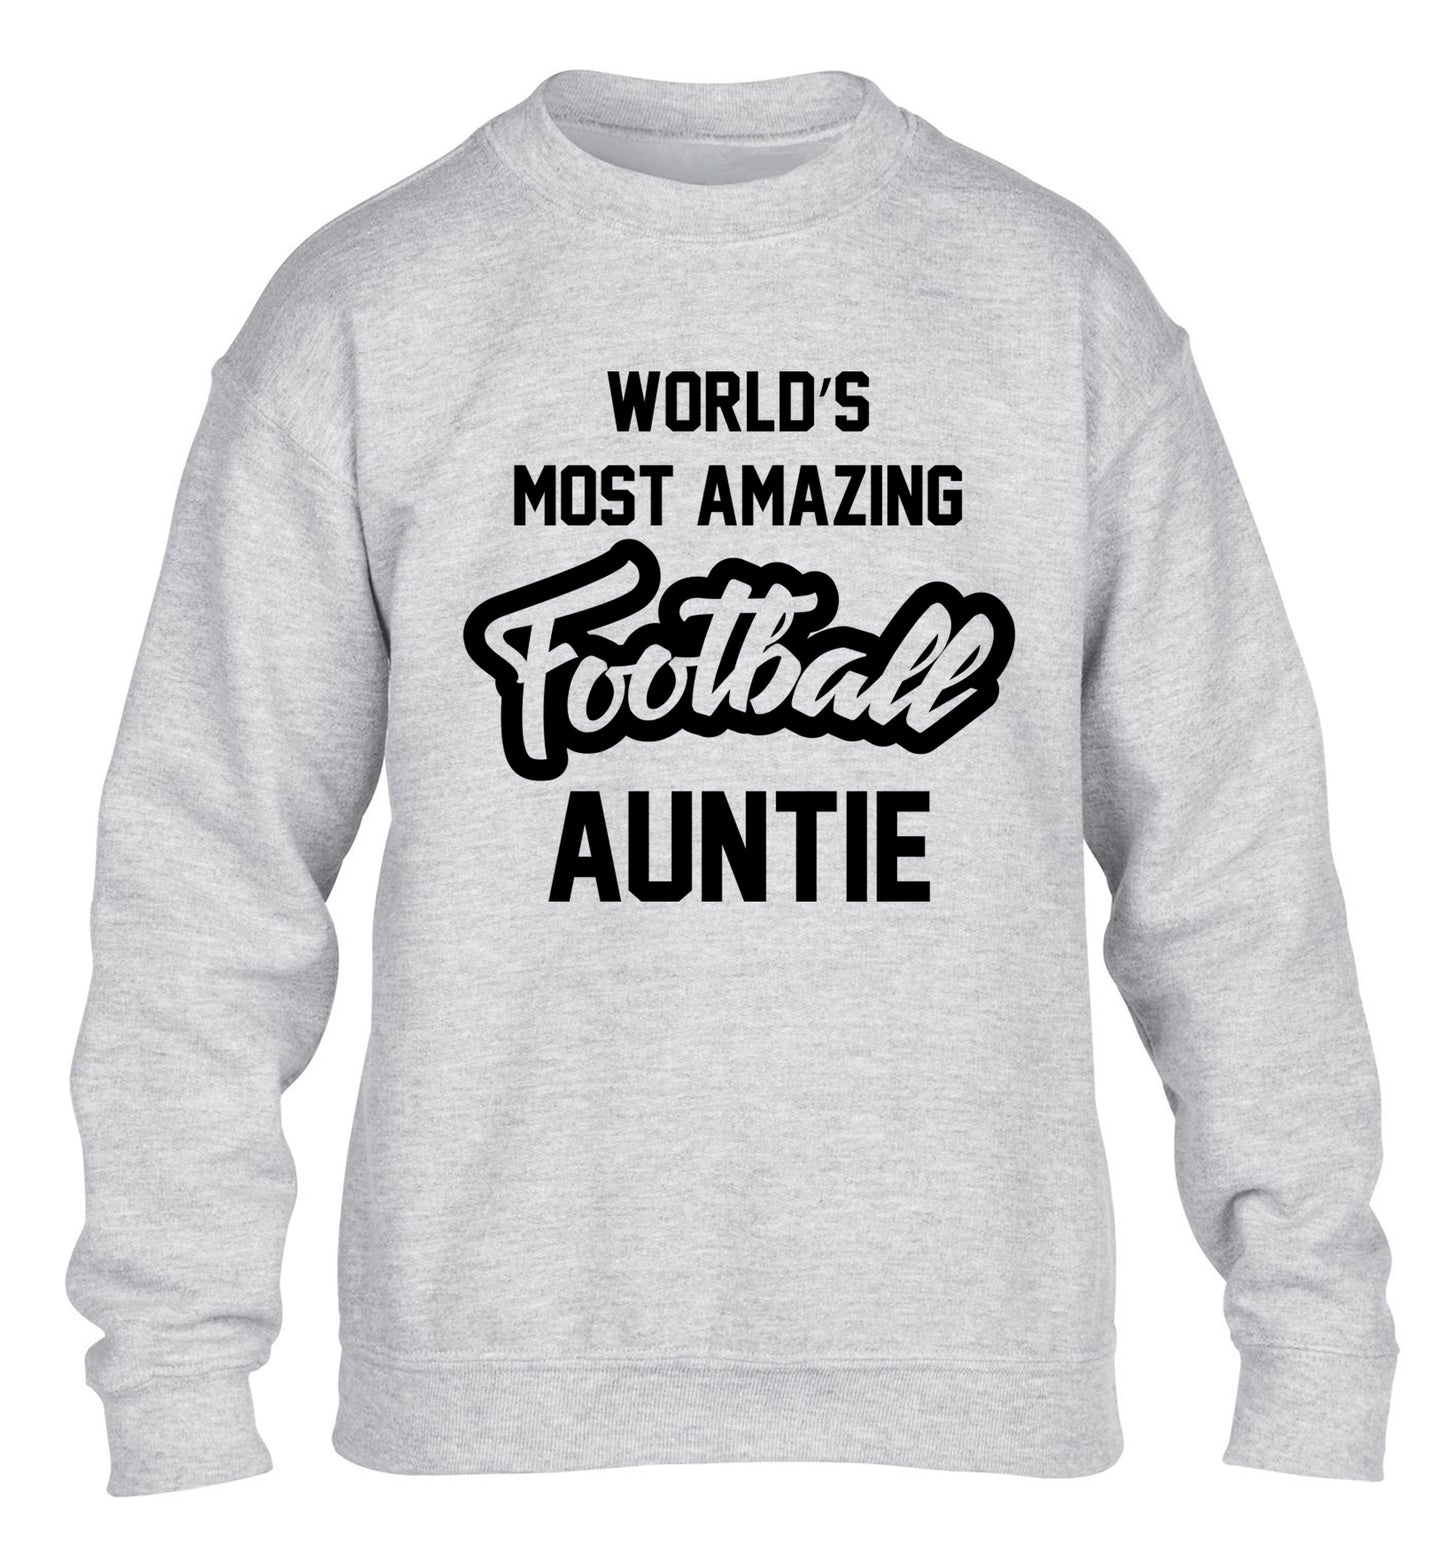 Worlds most amazing football auntie children's grey sweater 12-14 Years